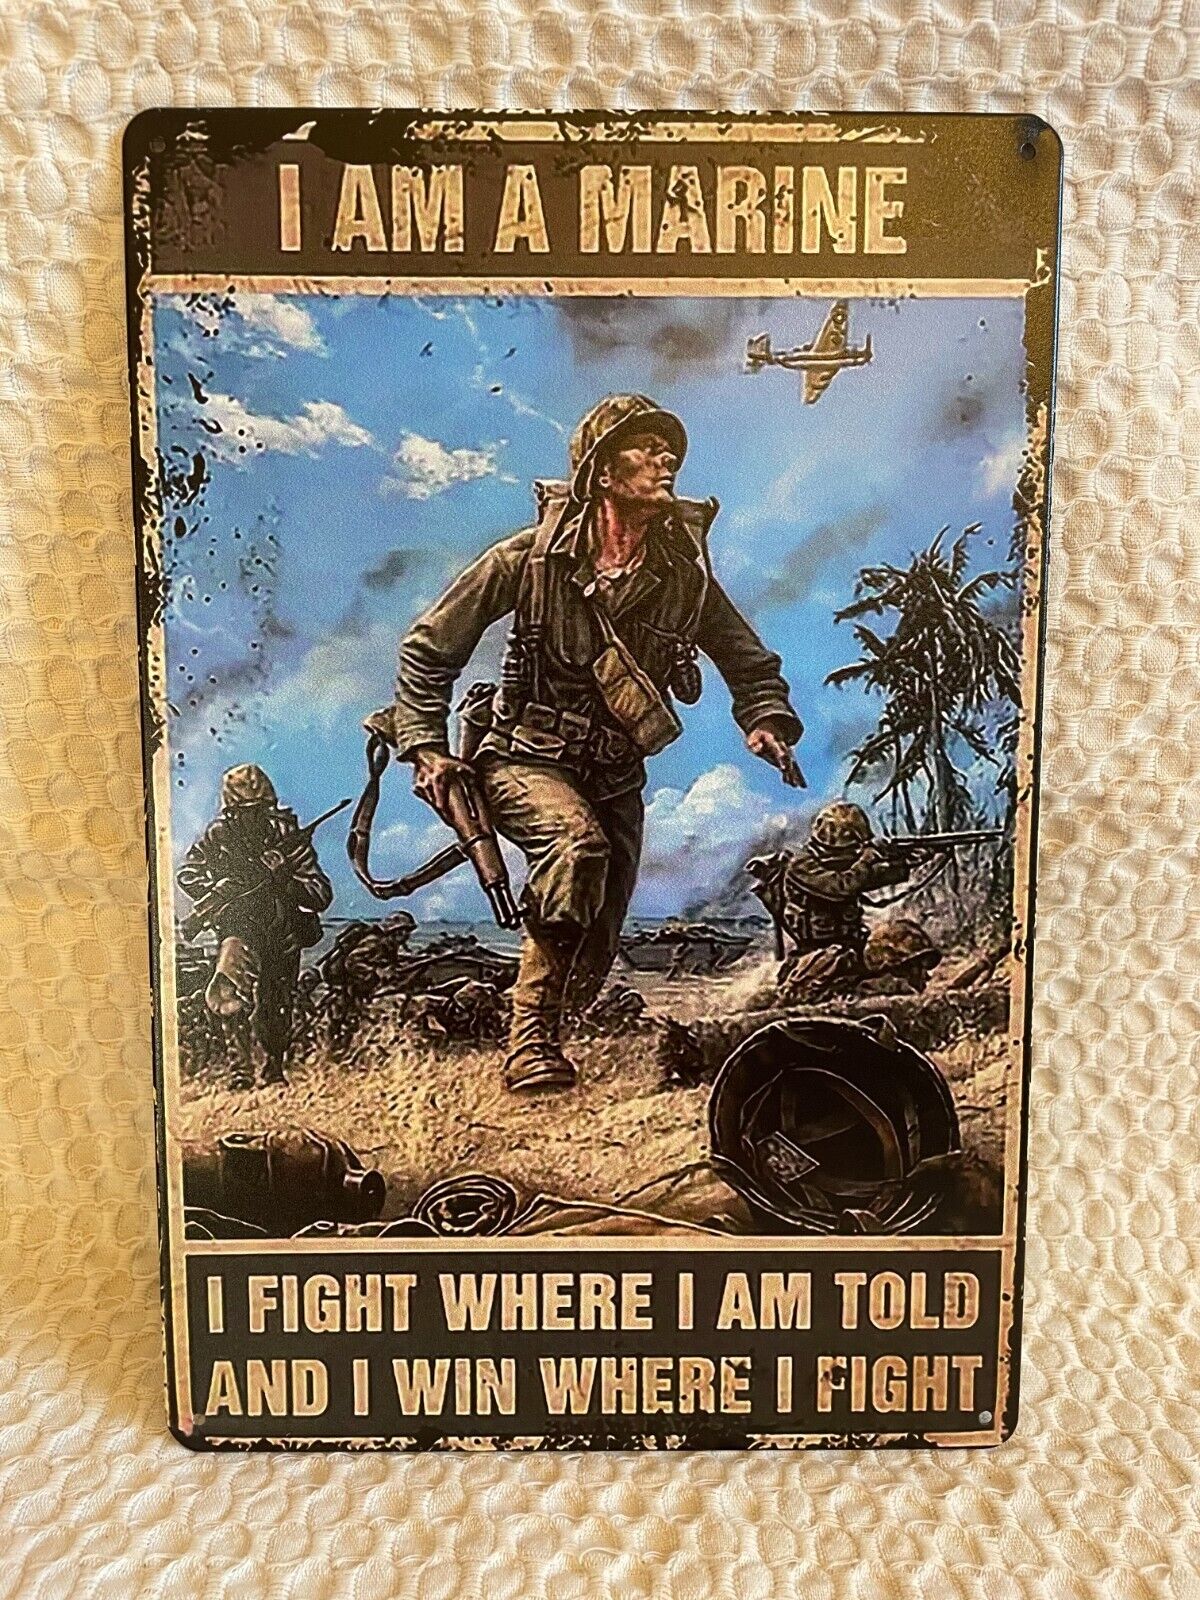 Us Marines Inspirational Retro Metal Poster Vintage Style Tin Plate I'M A MARINE